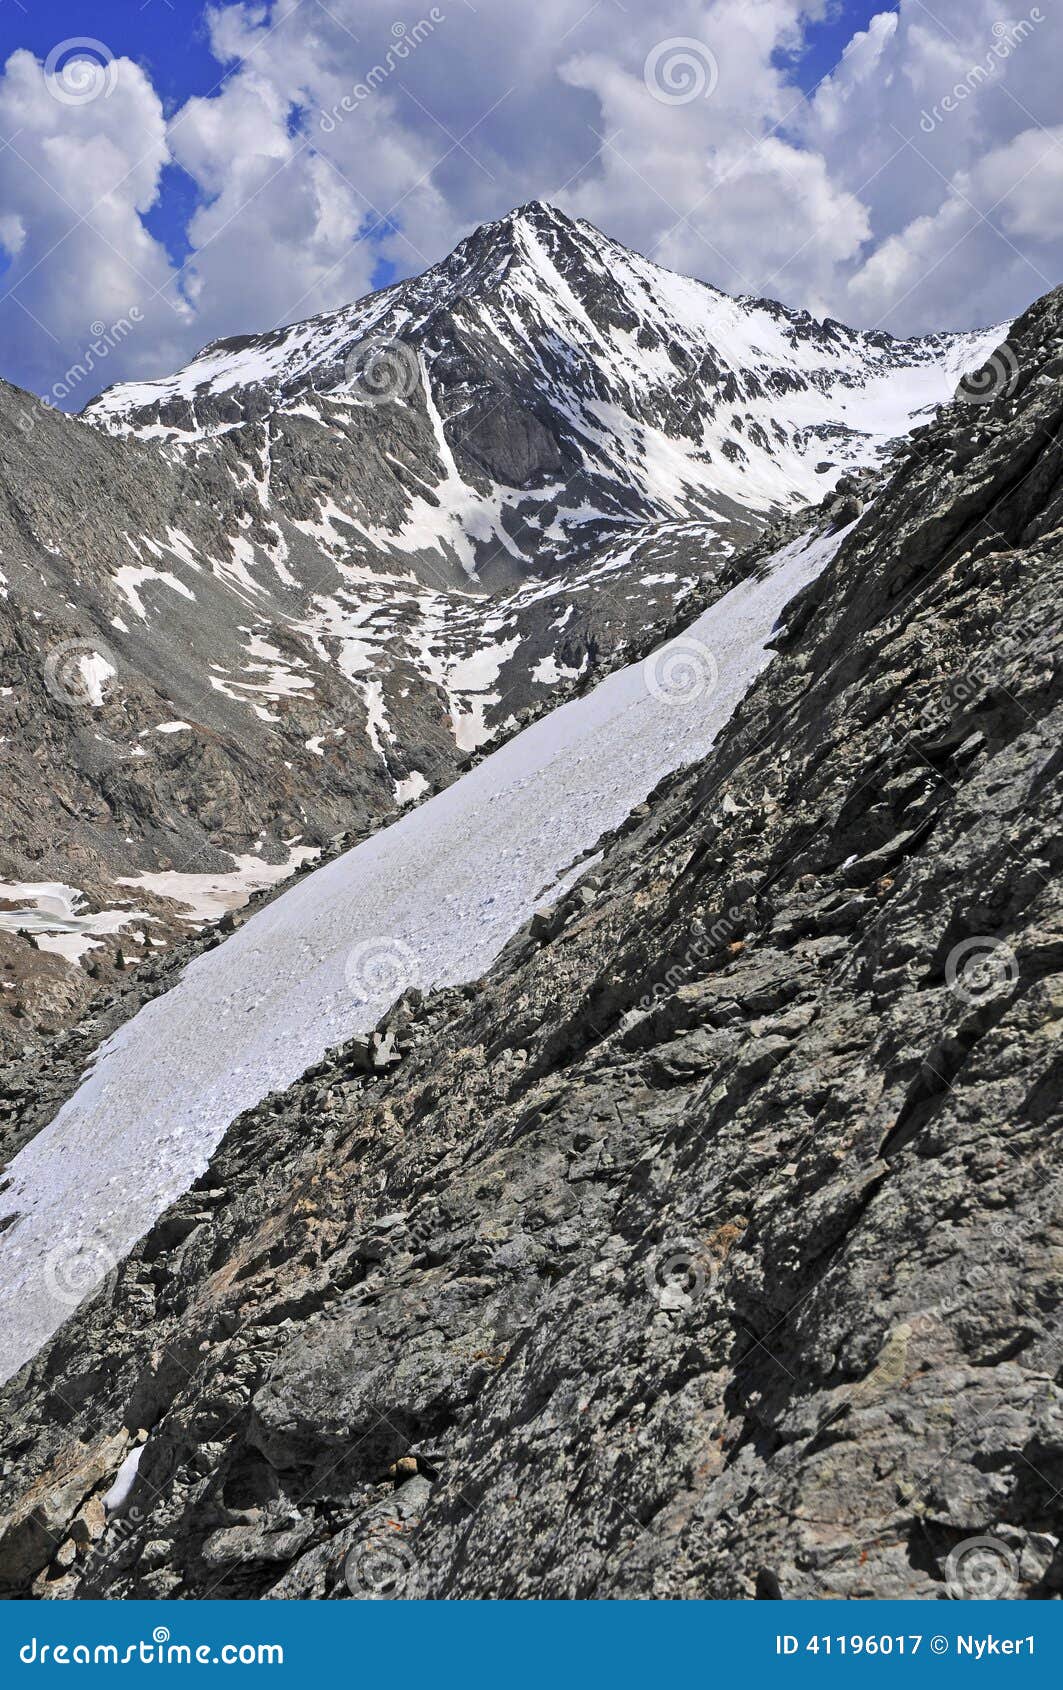 snow capped peaks and rock in the sangre de cristo range, colorado